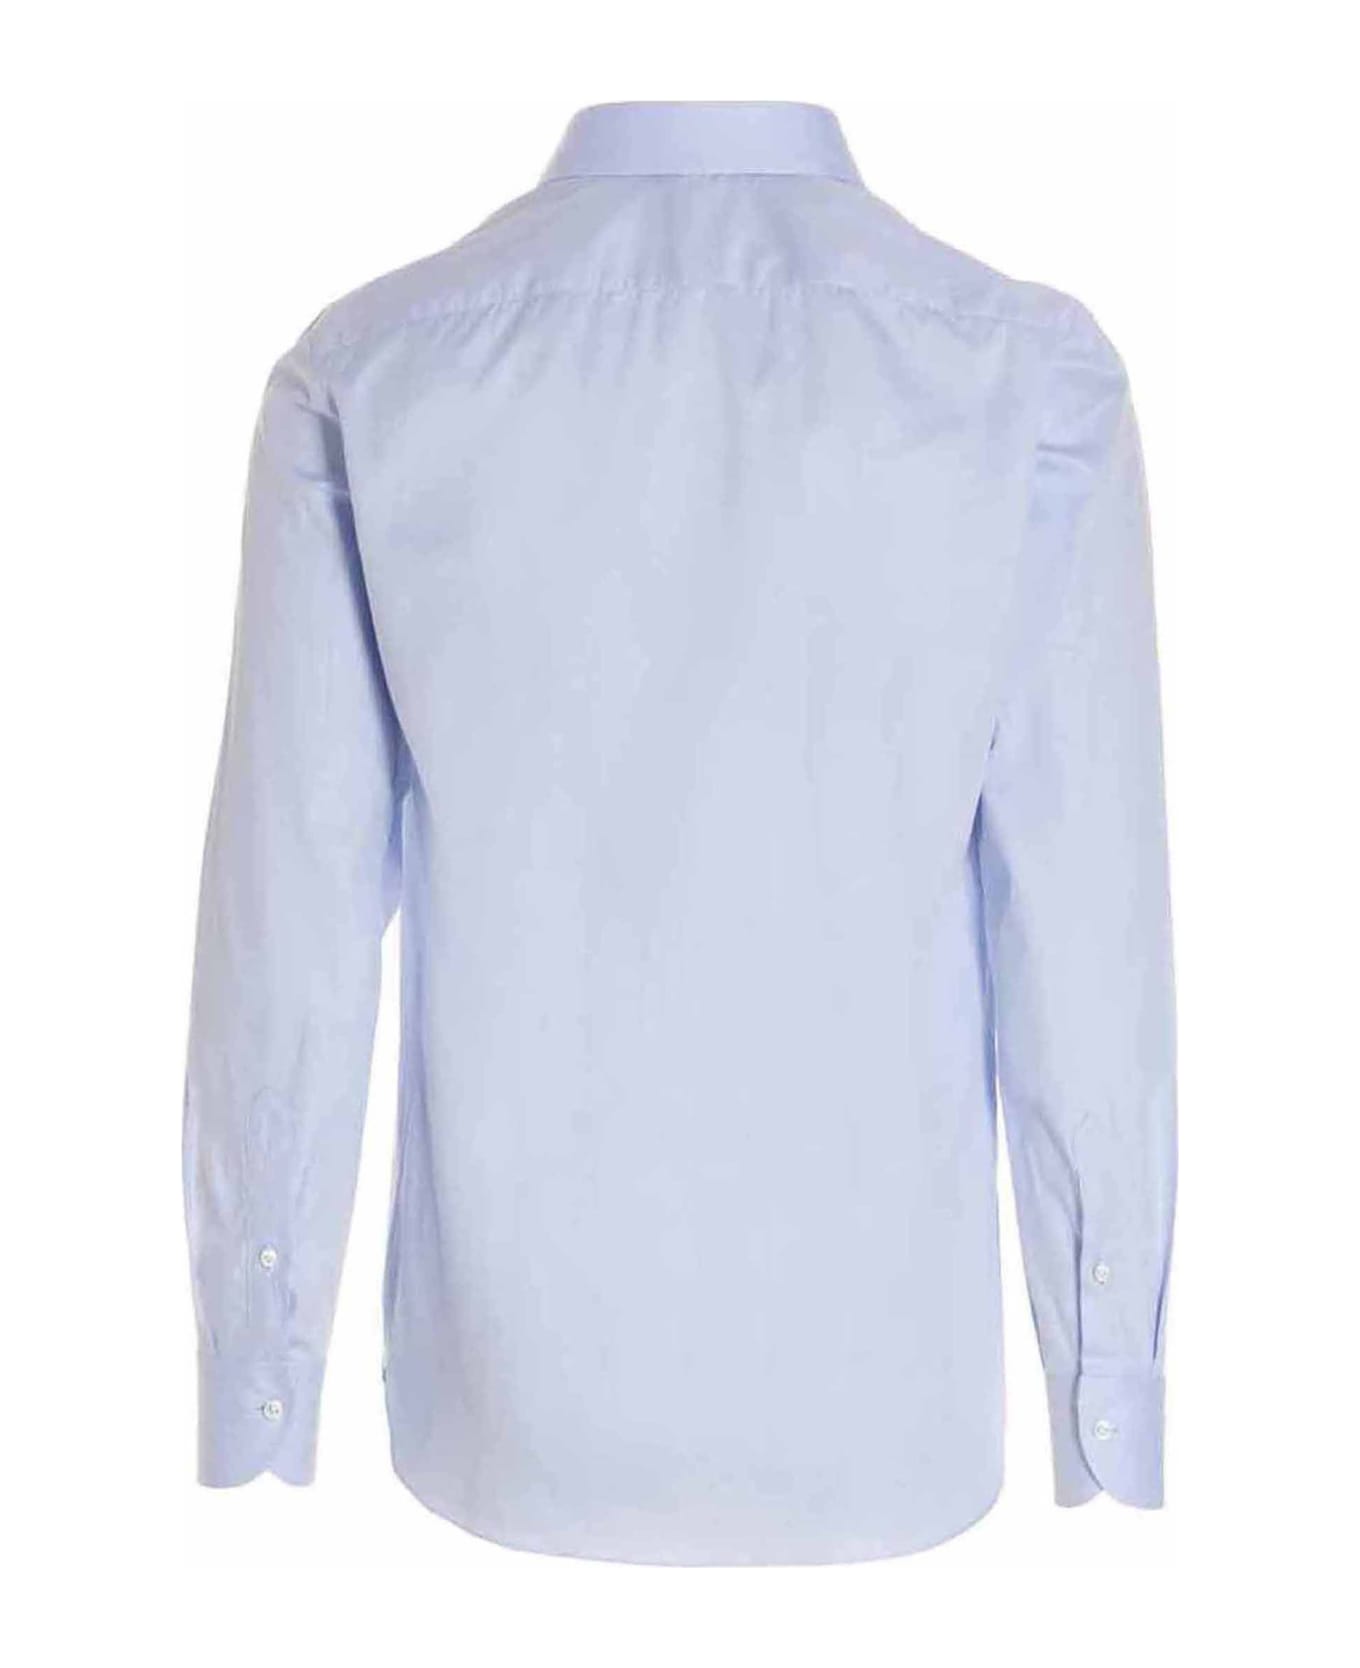 Borriello Napoli 'marechiaro' Shirt - Light Blue シャツ